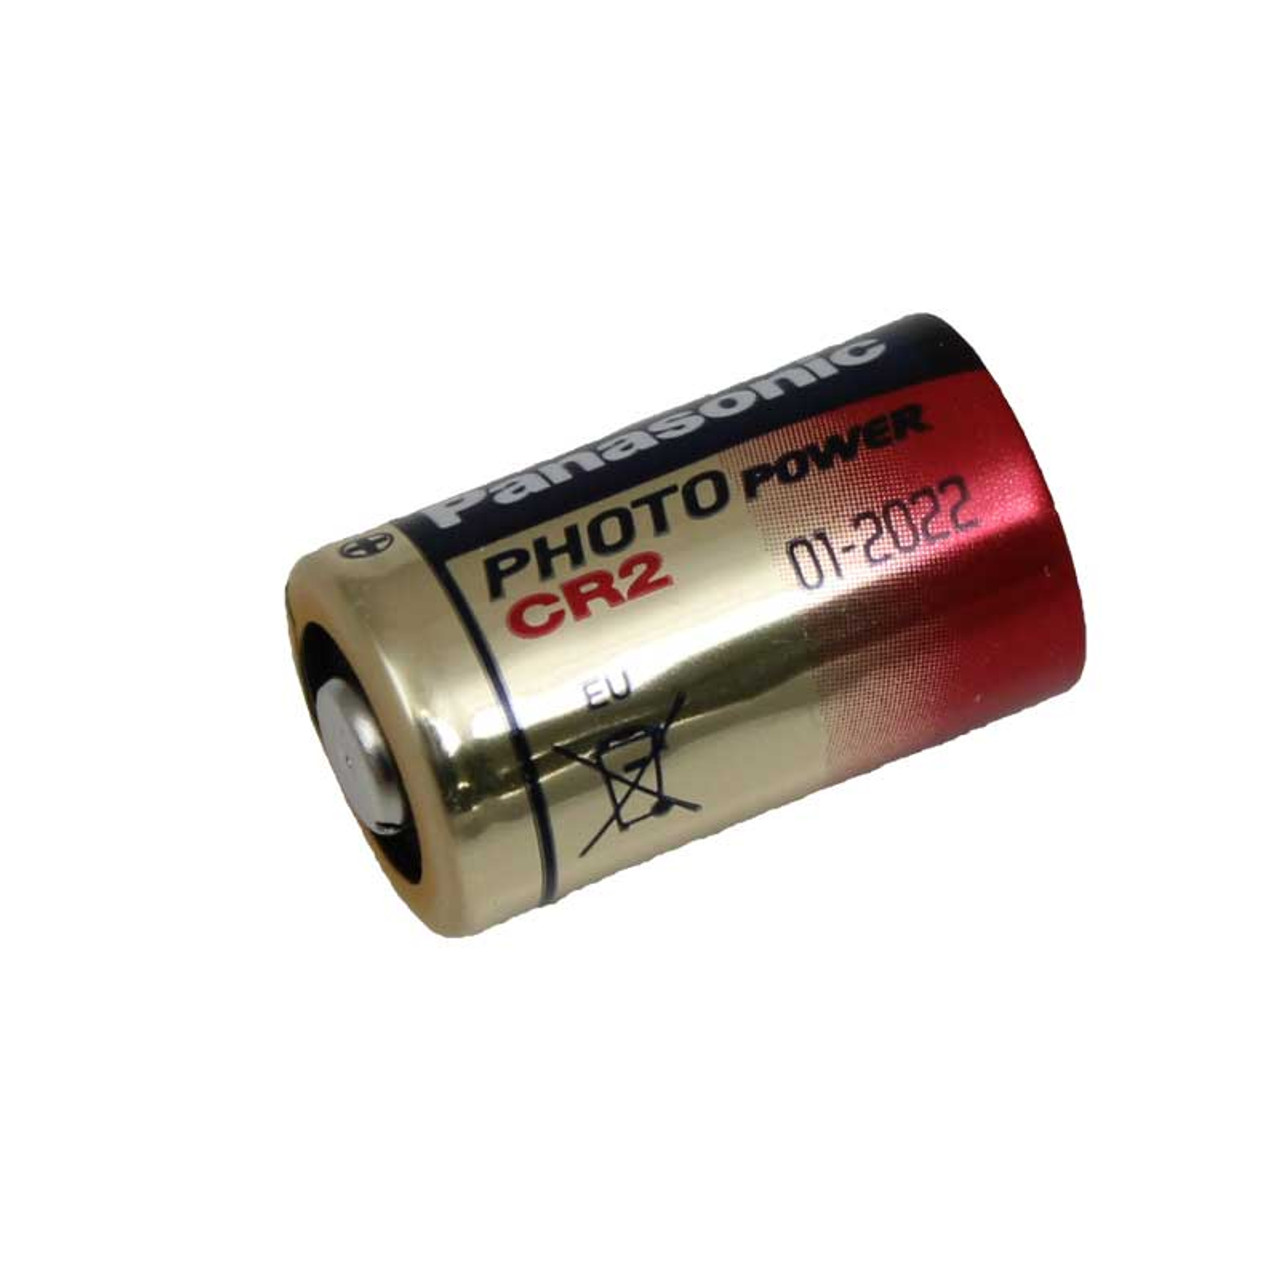 Panasonic CR2 Battery - 3V Lithium Camera Photo